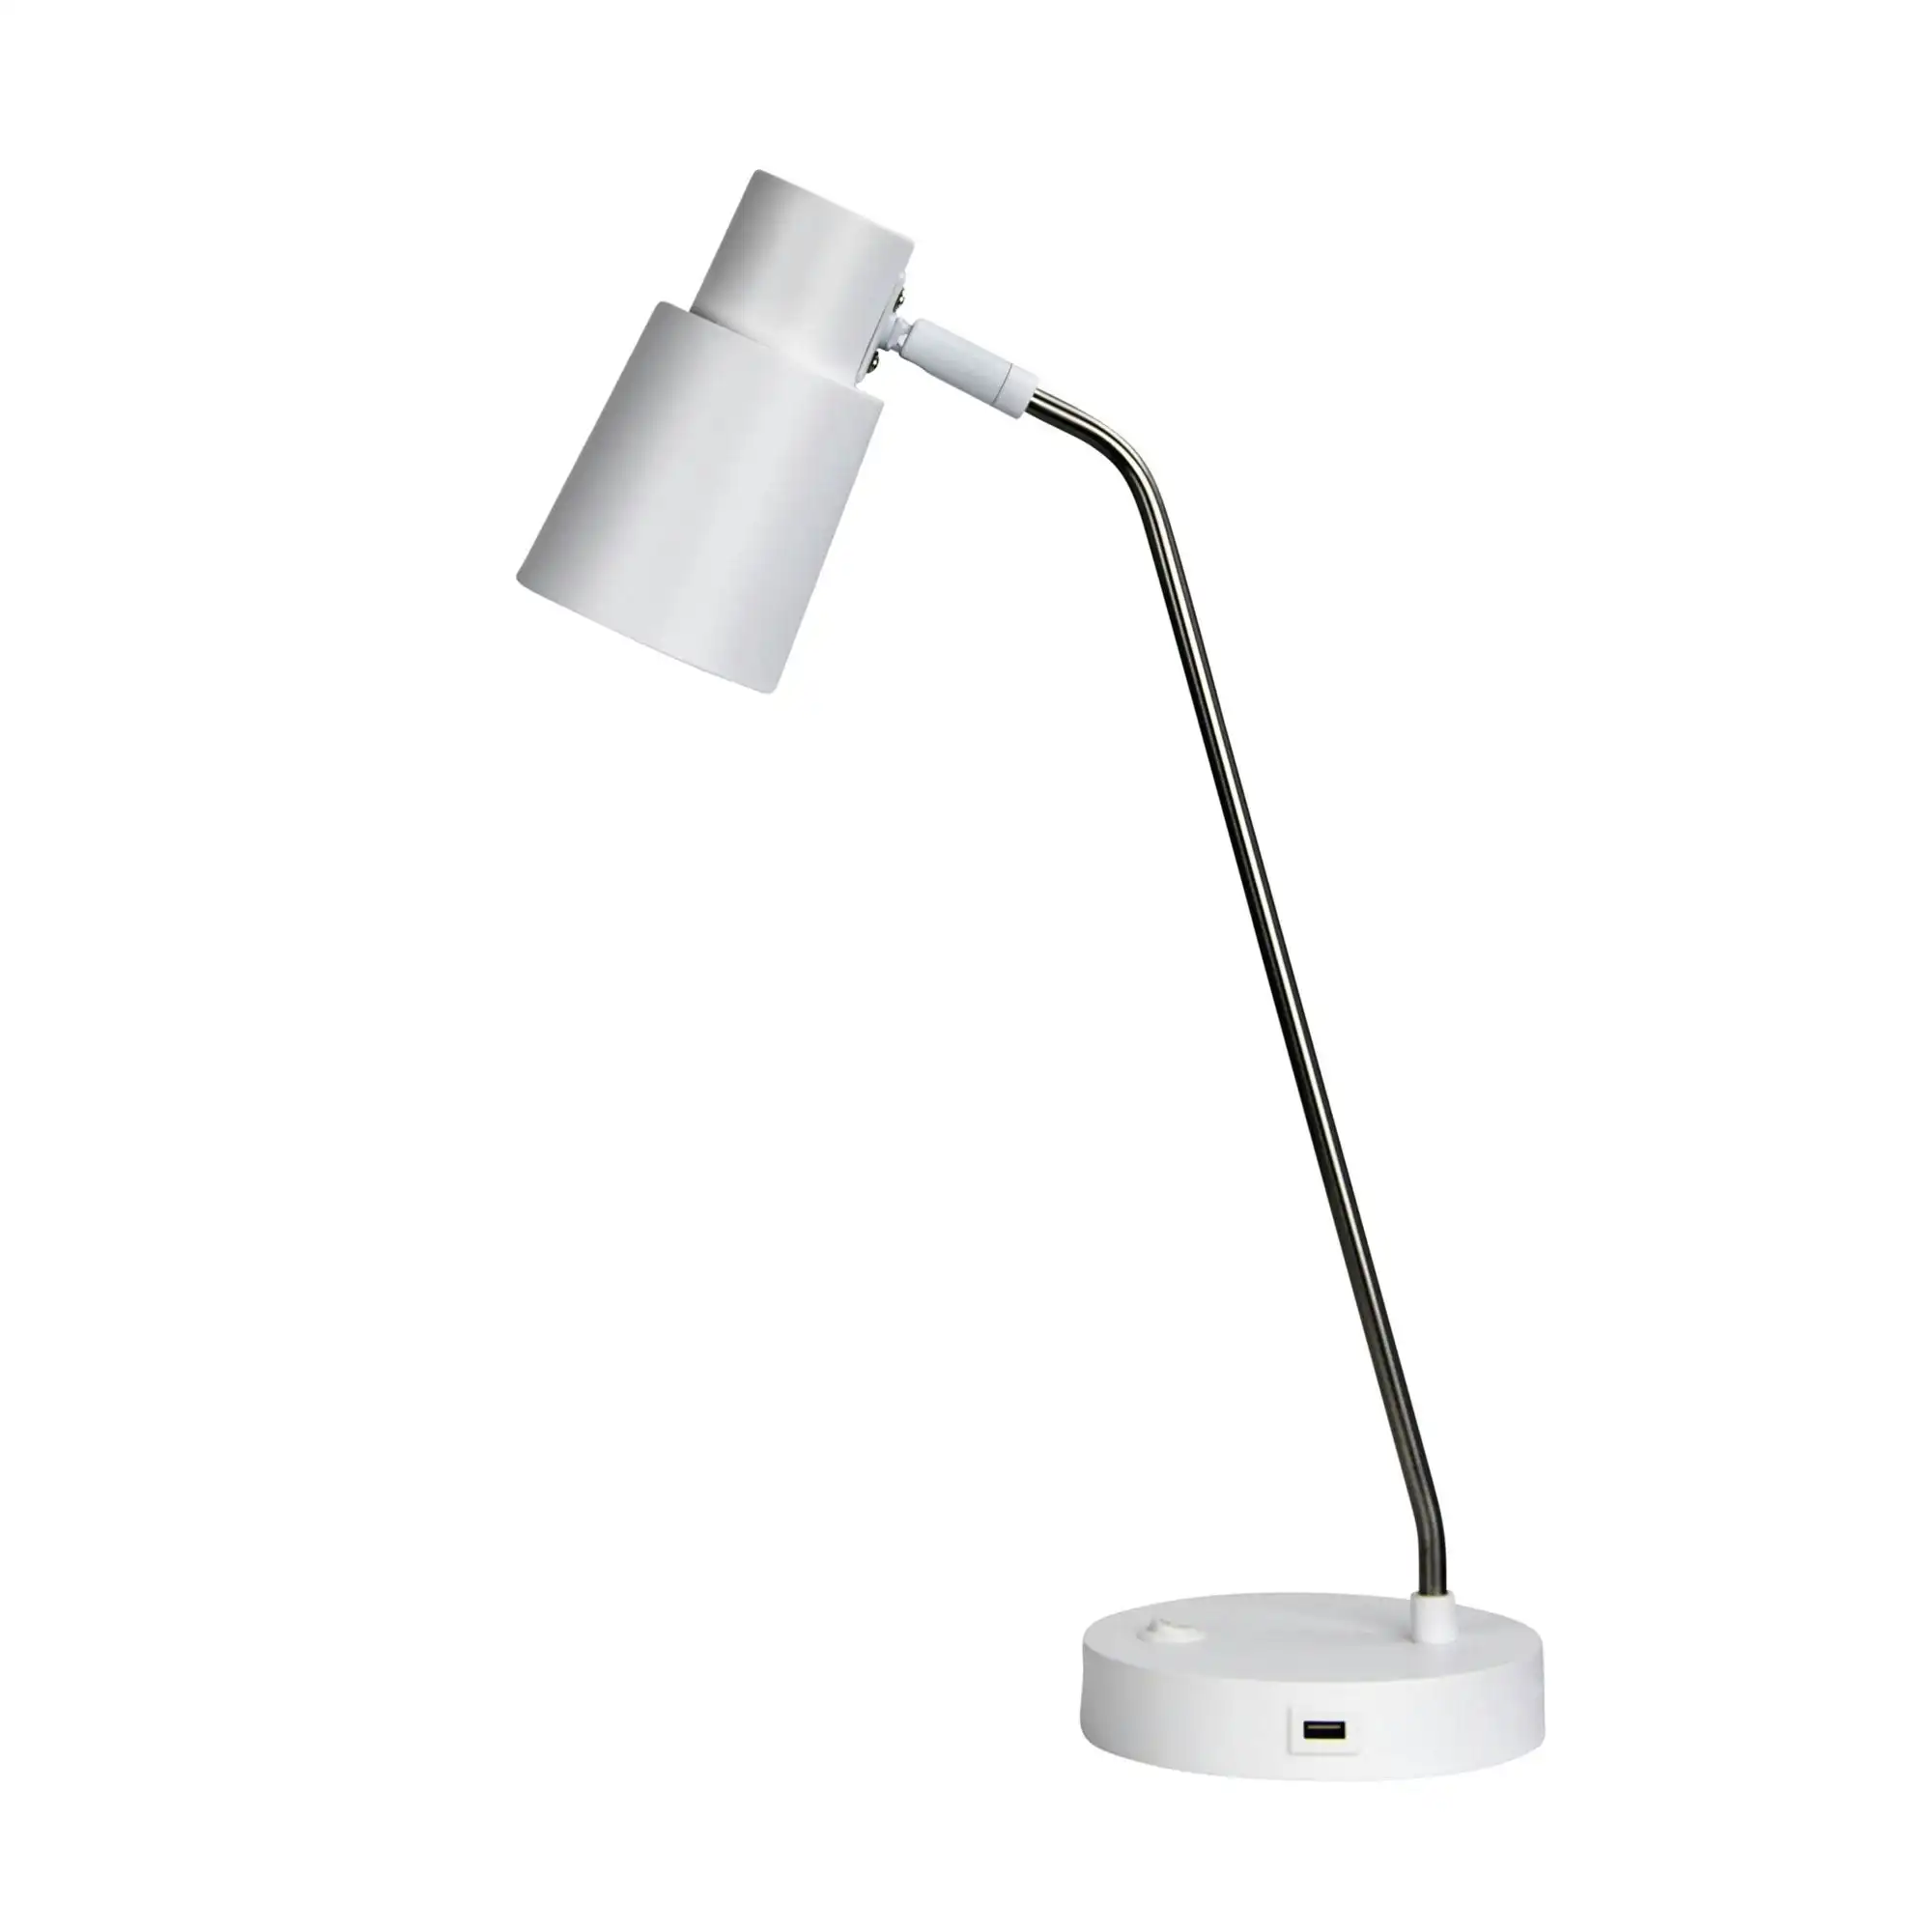 RIK White/Brushed Chrome Table lamp with USB socket